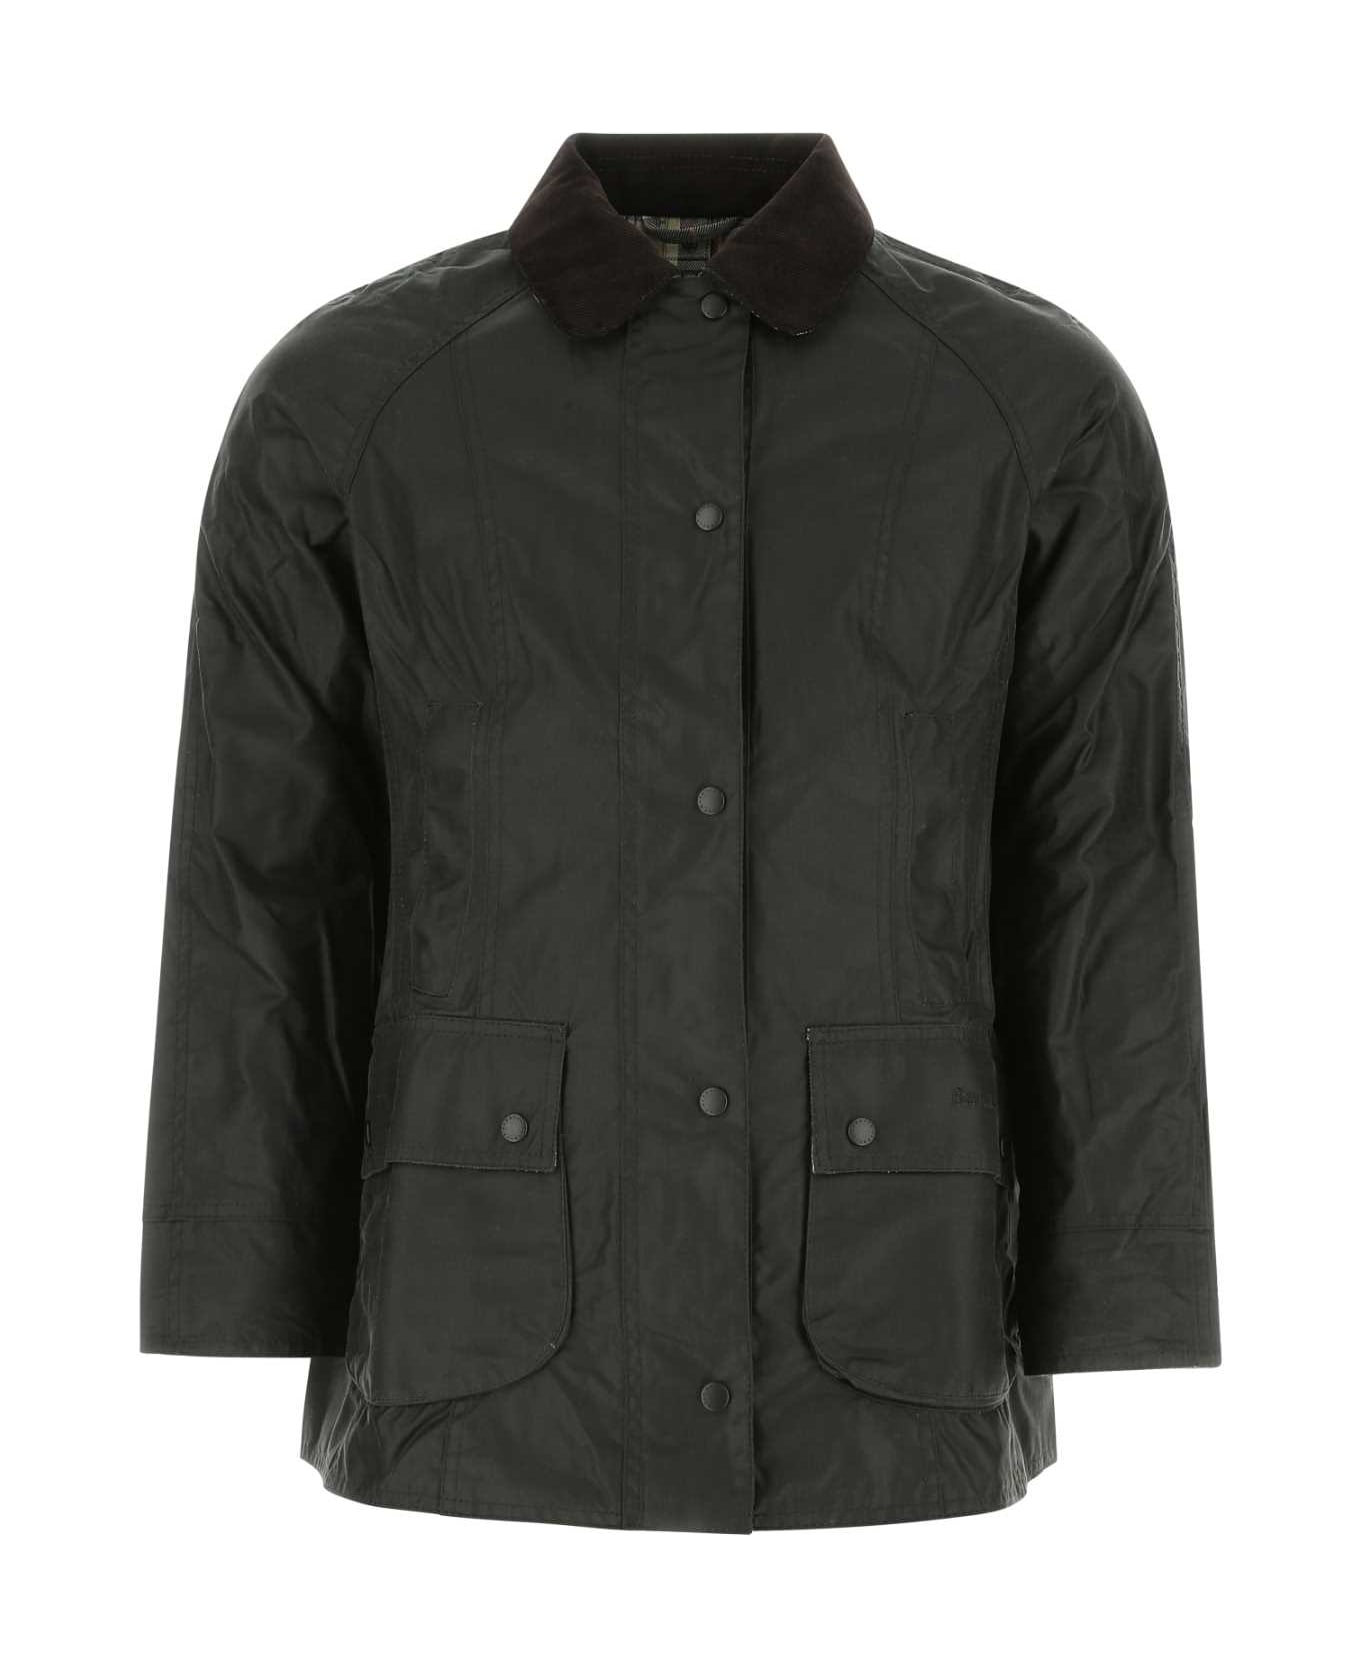 Barbour Dark Green Cotton Beadnell Jacket - SG91